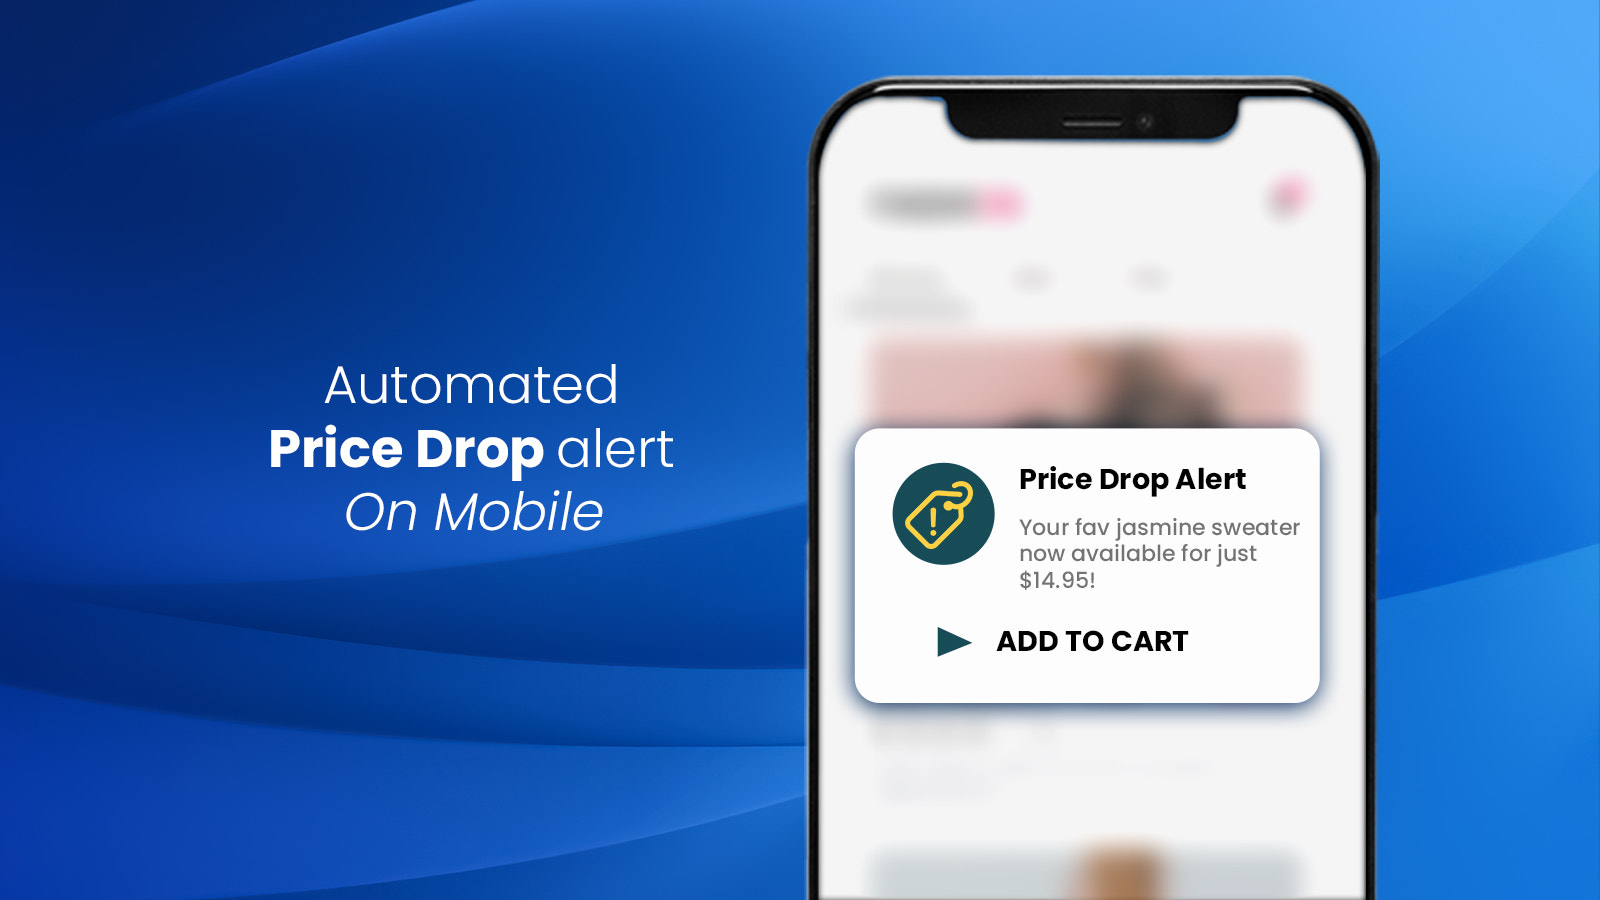 Price drop alert on mobile